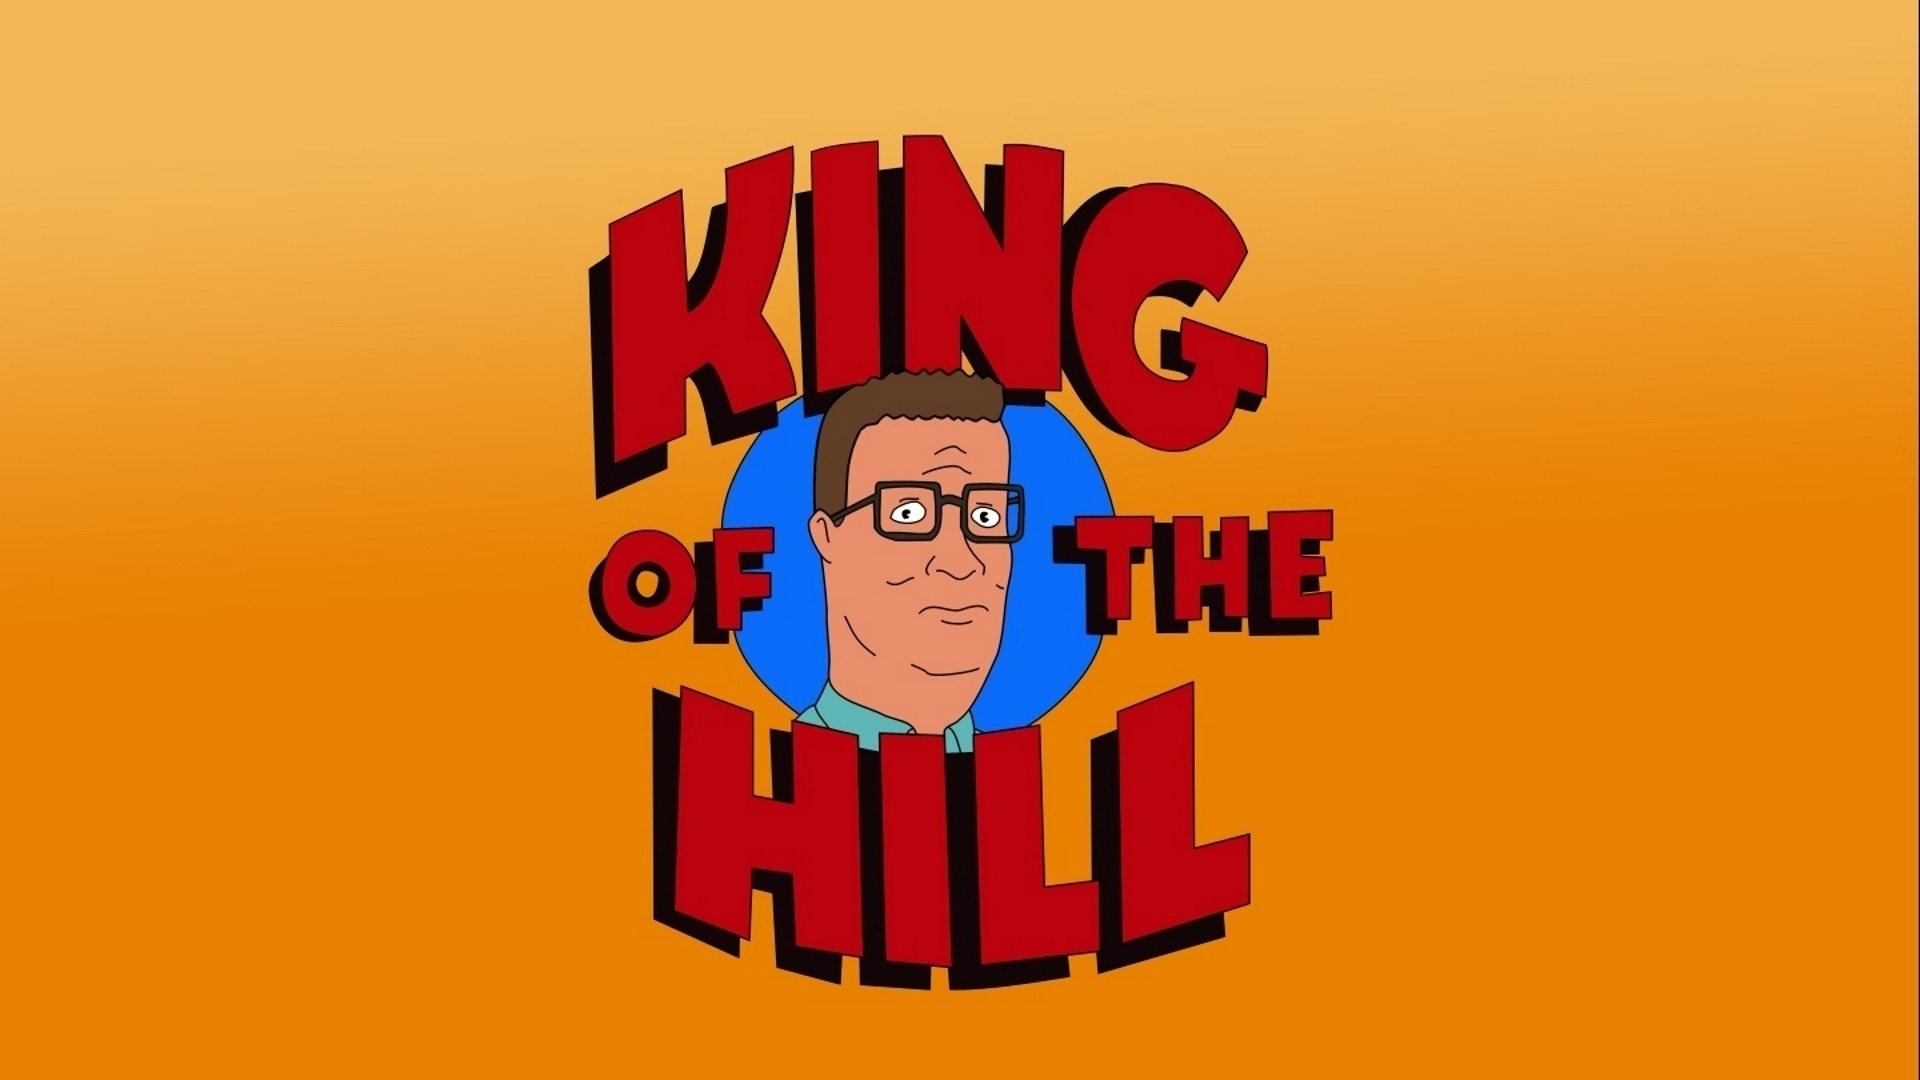 King of the Hill, Cartoon wallpaper, Animated series, Hank Hill, 1920x1080 Full HD Desktop